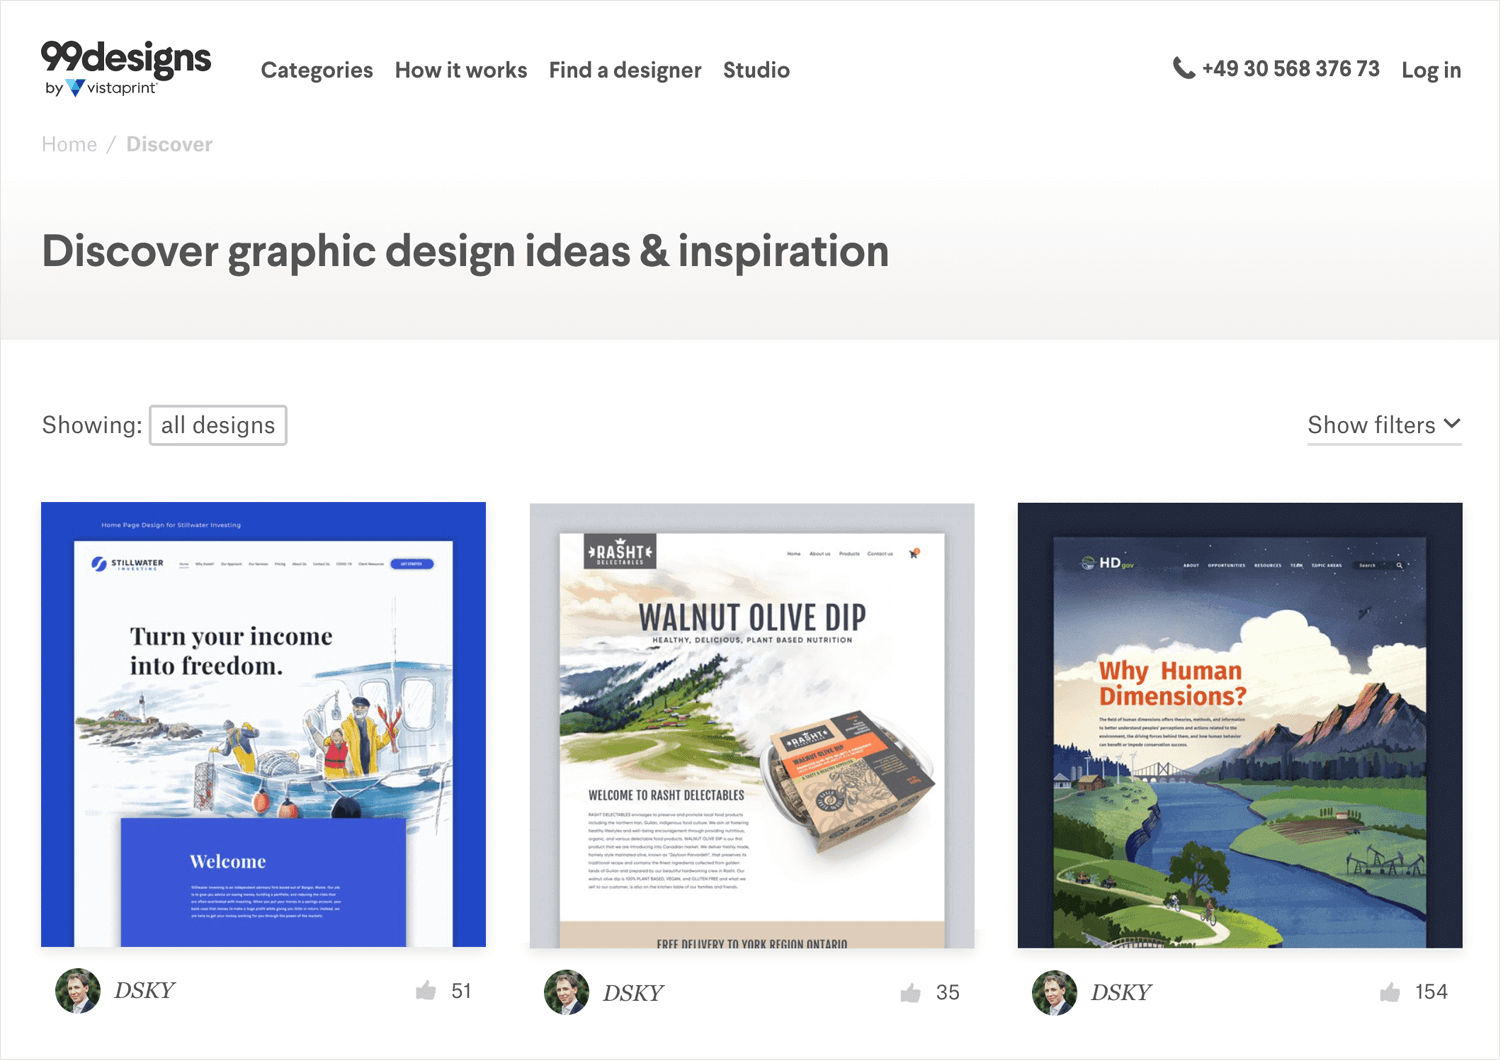 99 designs as source of web design inspiration